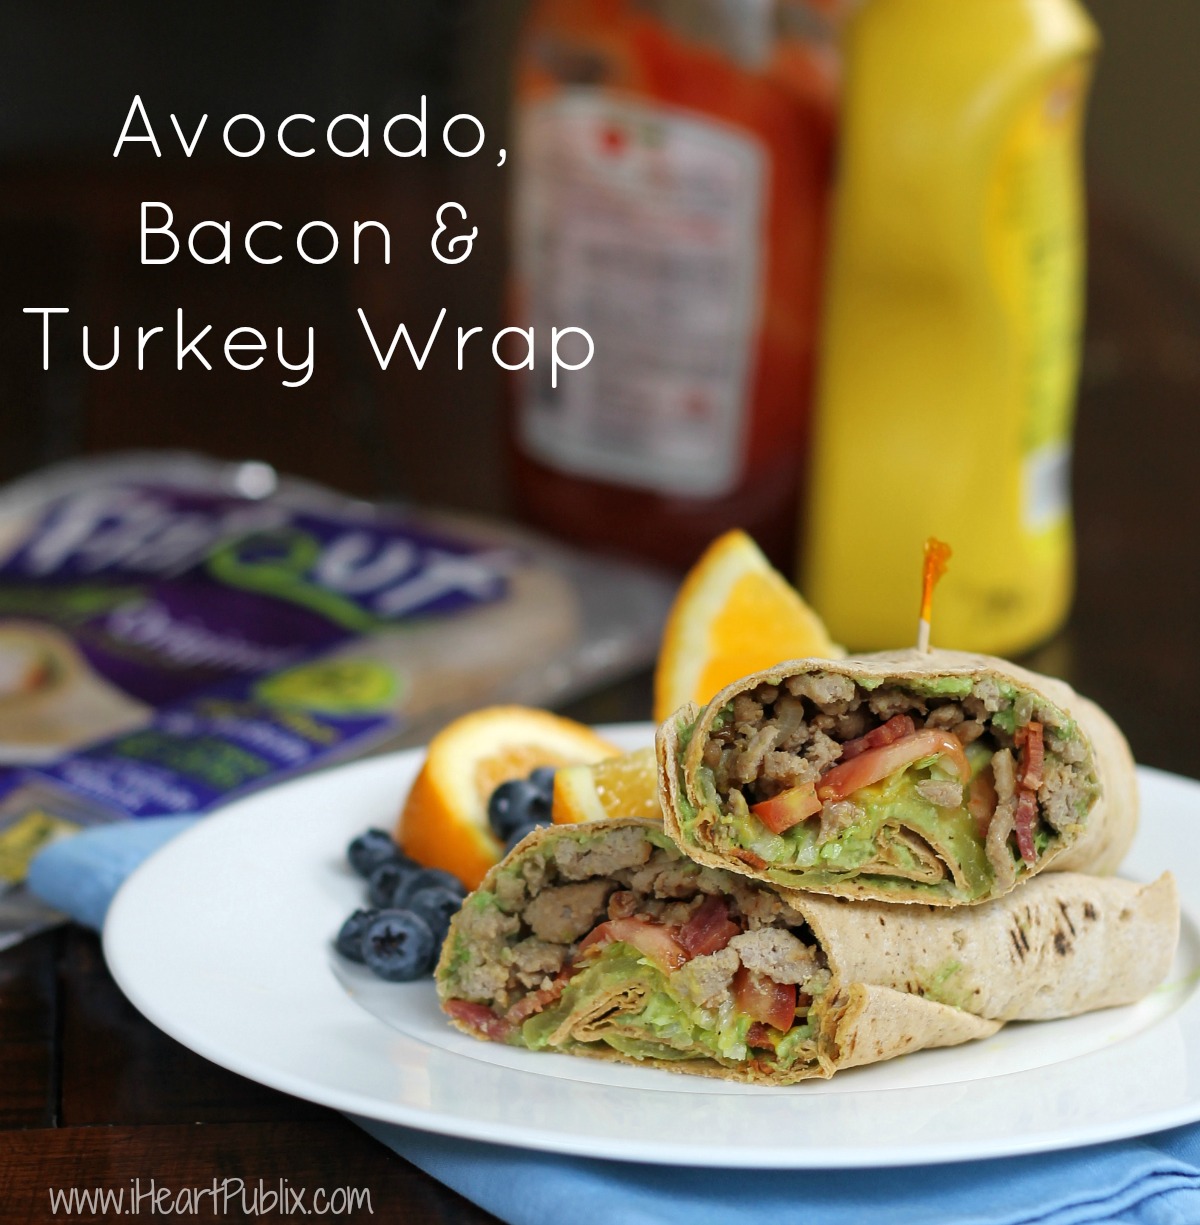 Avocado, Bacon & Turkey Wrap